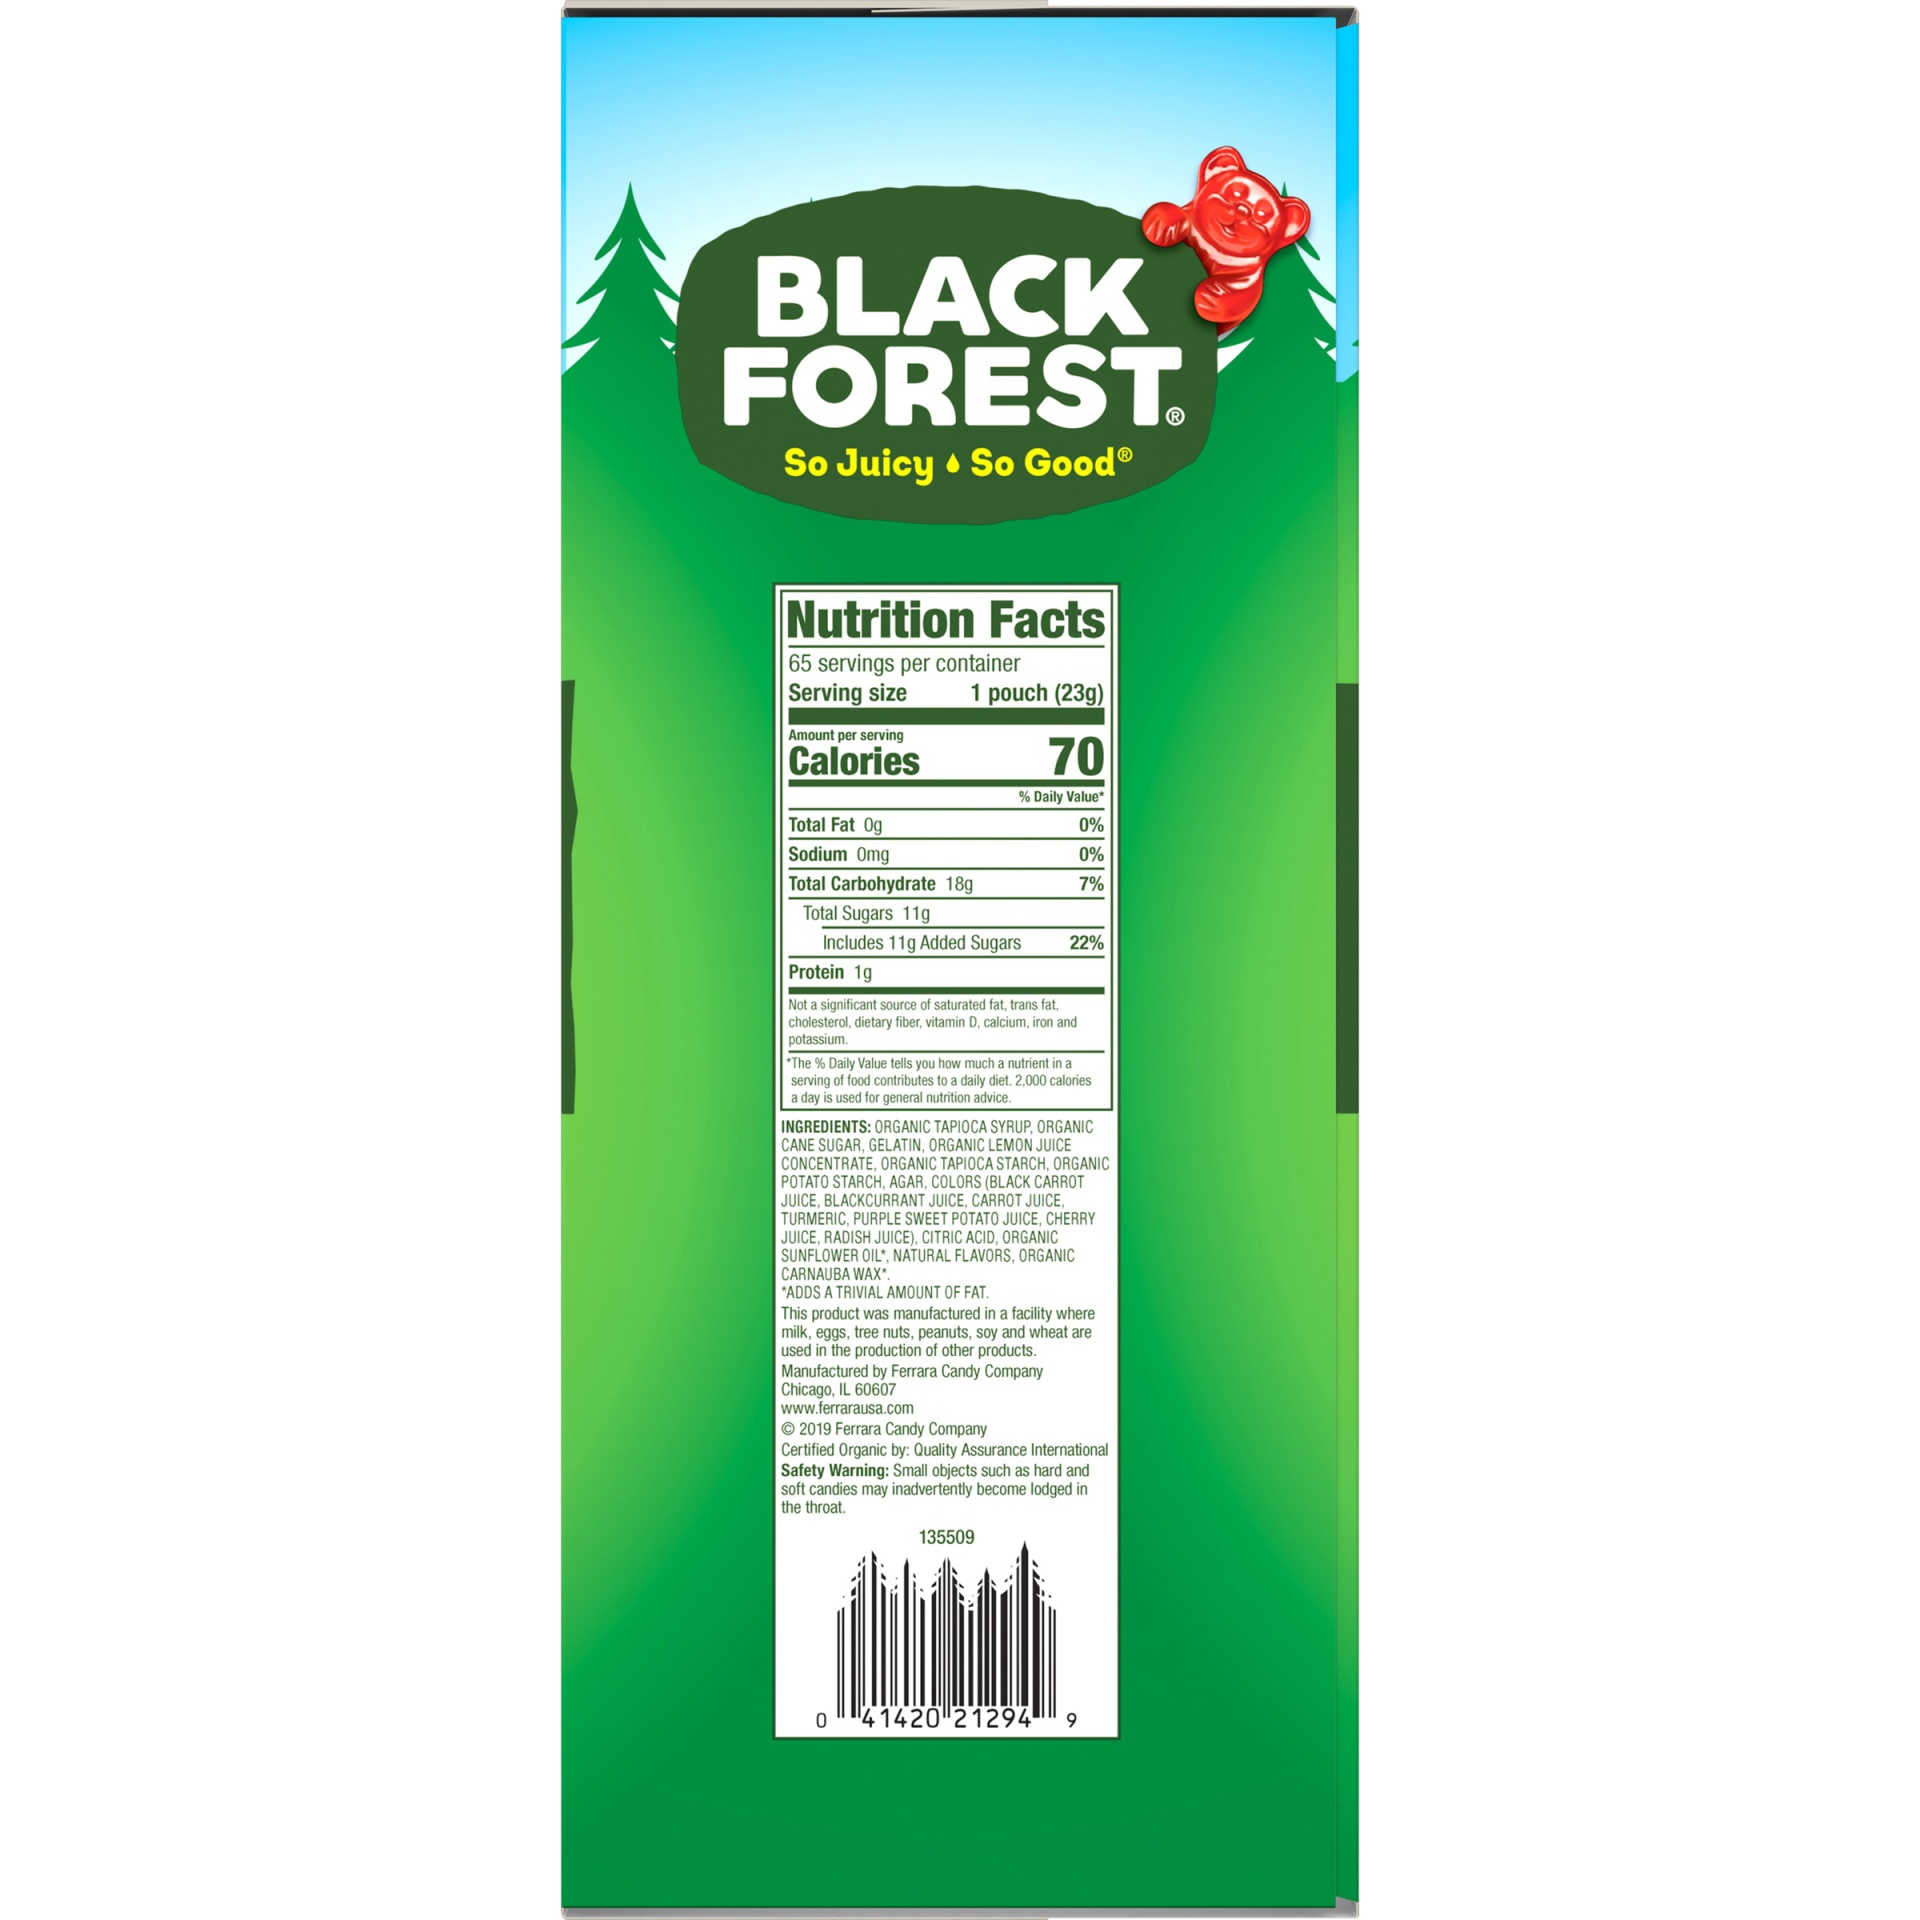 organic black forest gummy bears ingredients